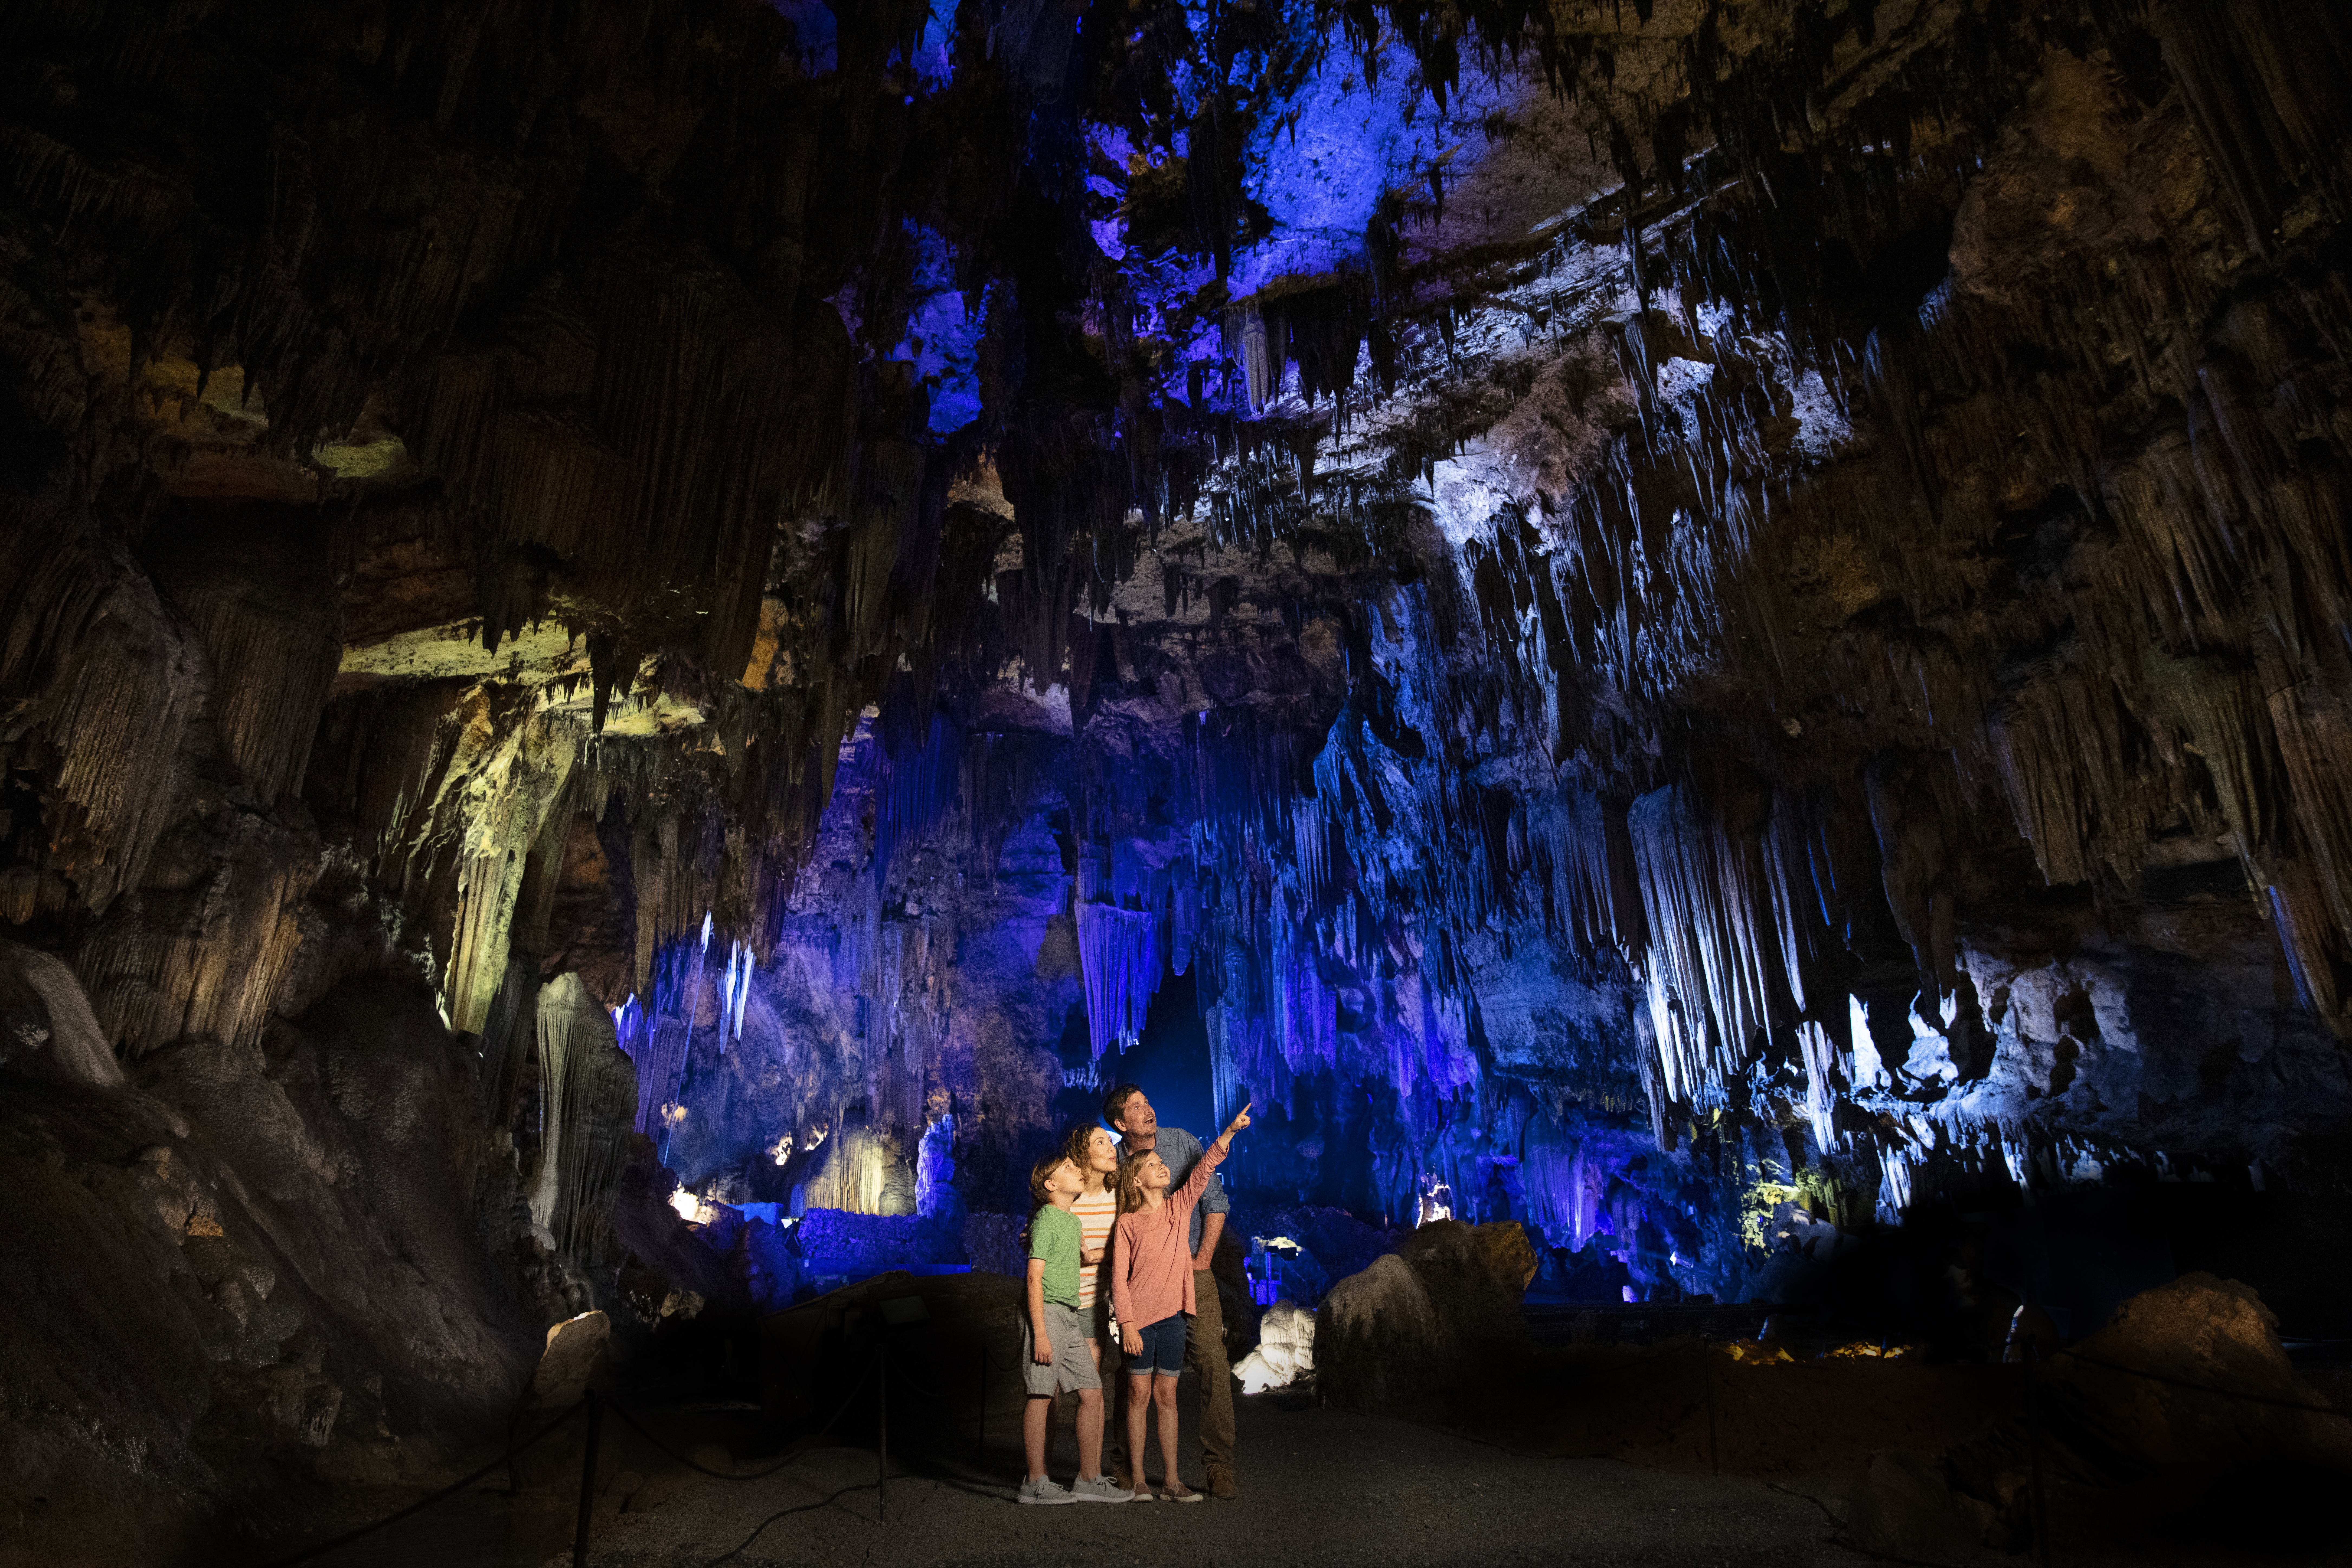 DeSoto Caverns Family Fun Park